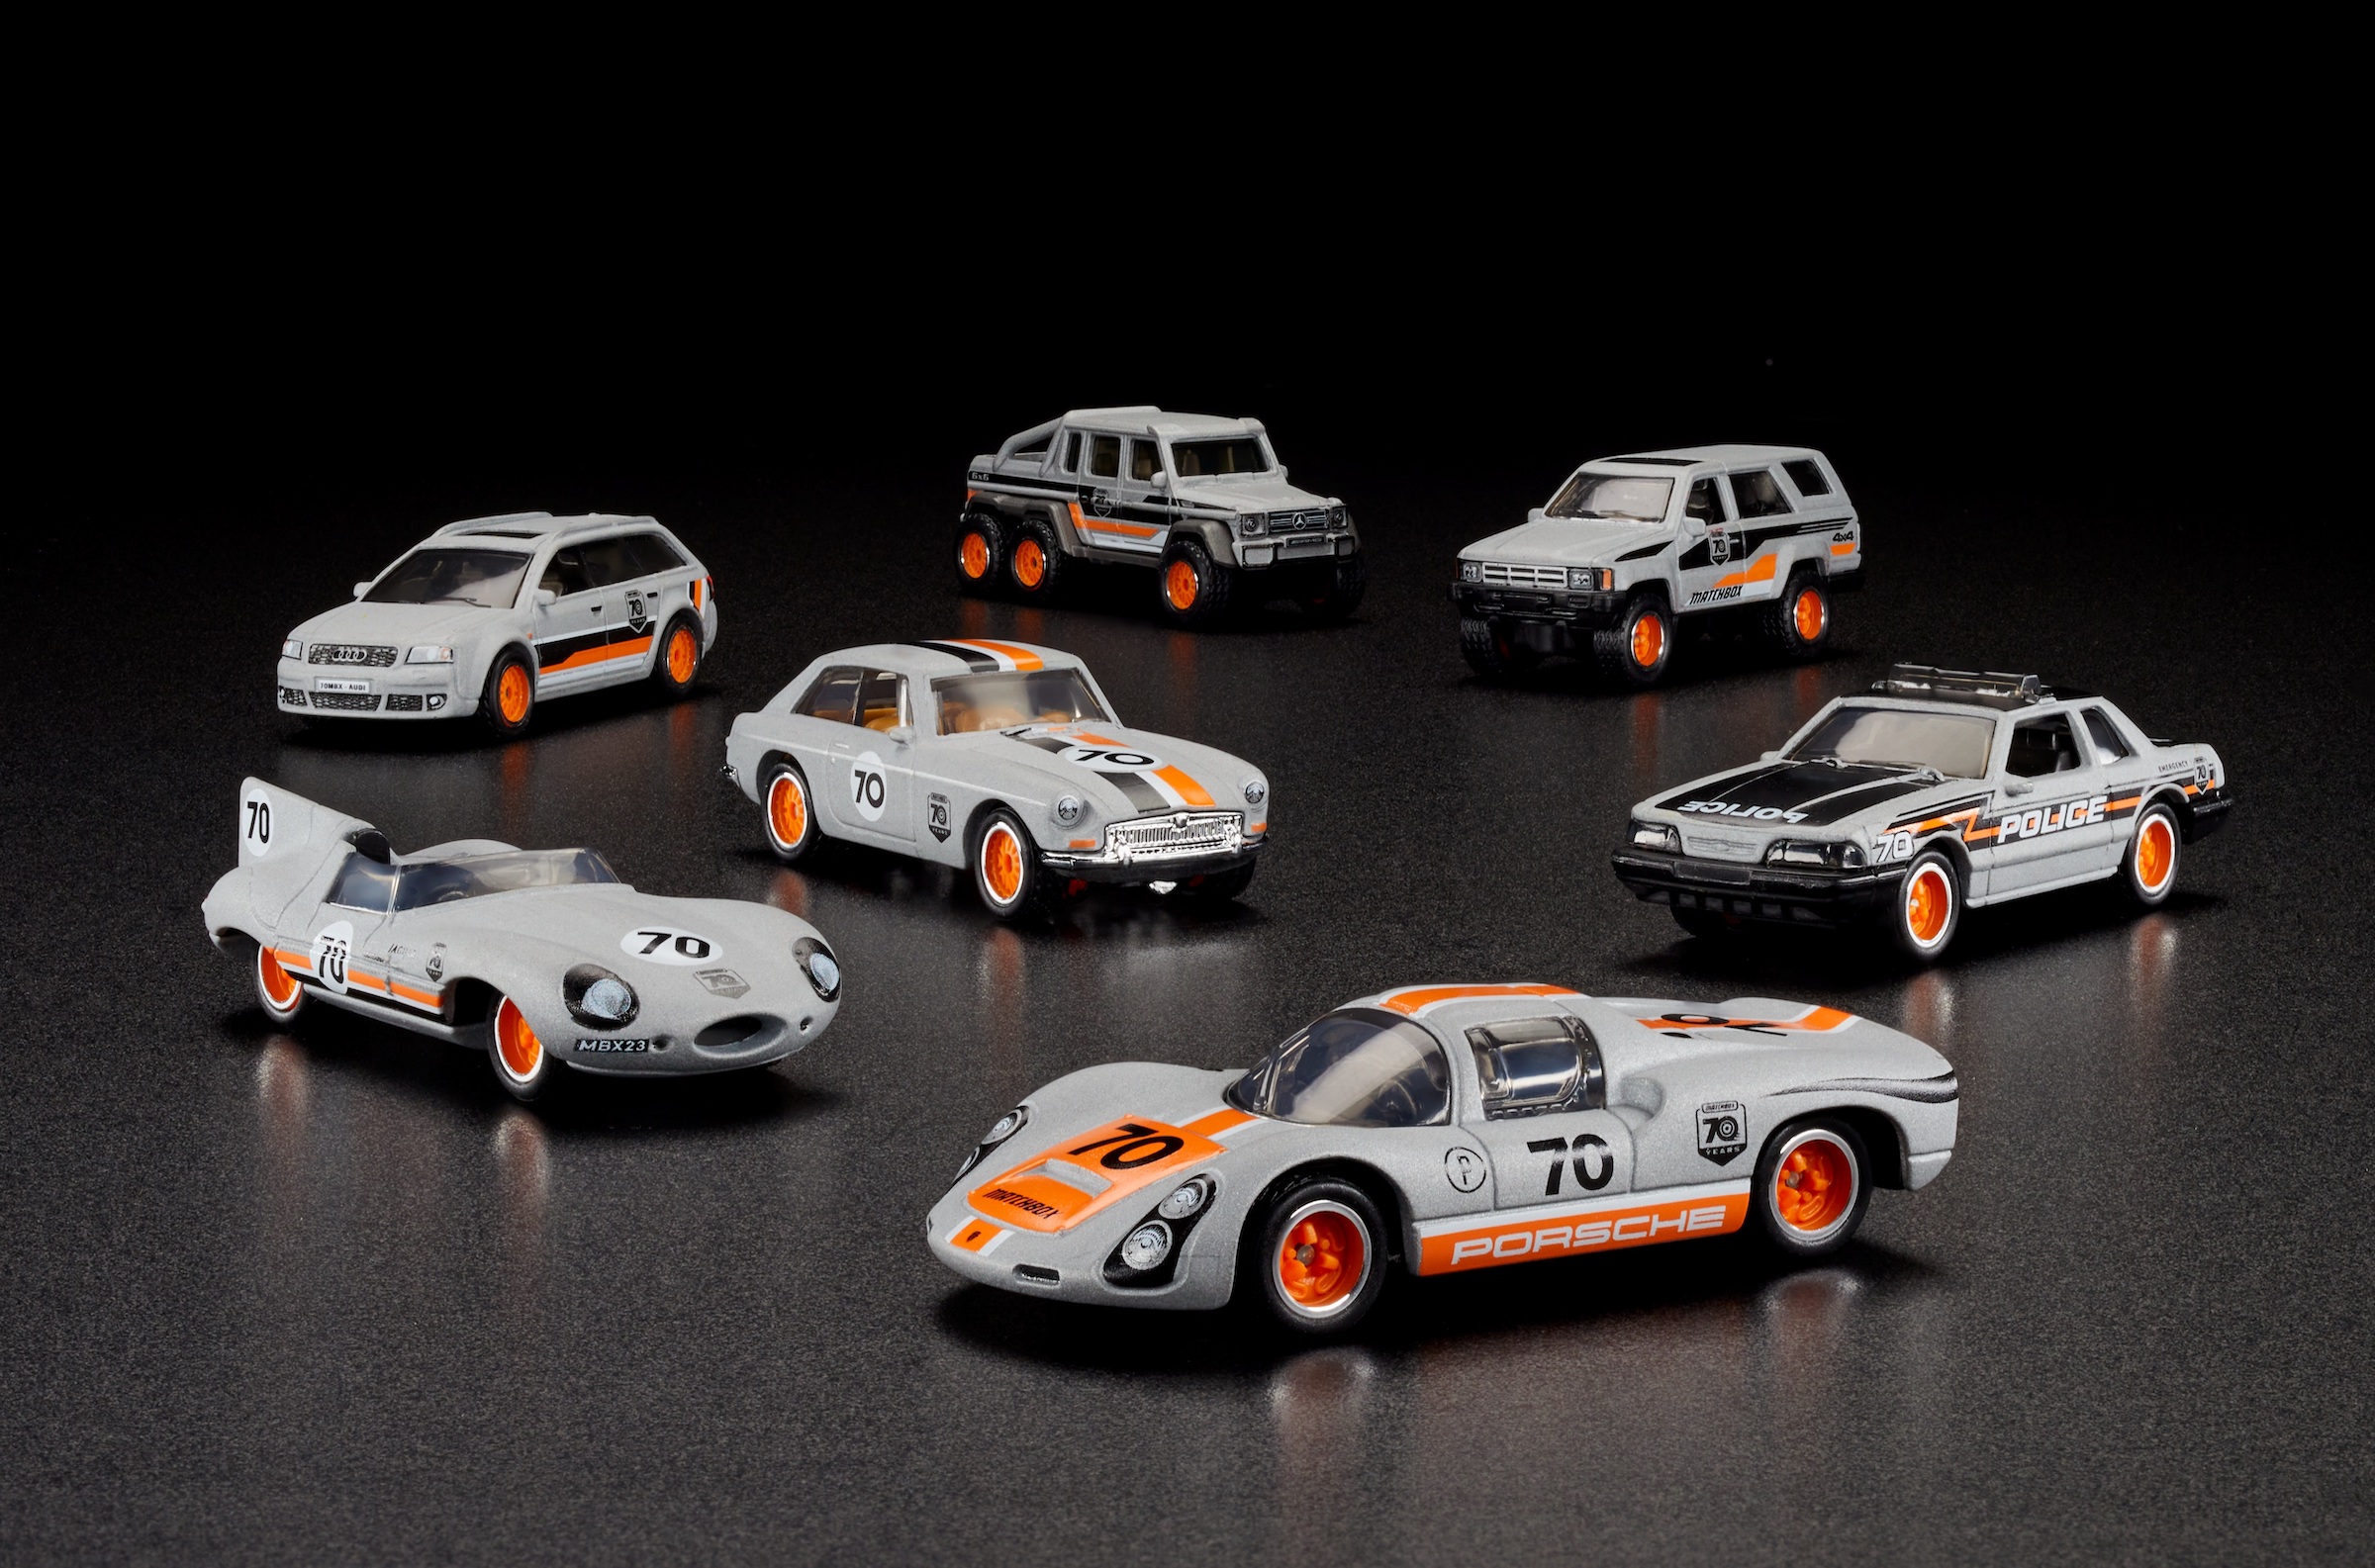 D-Type, MGB, Porsche 910 among 70th anniversary Matchbox collection